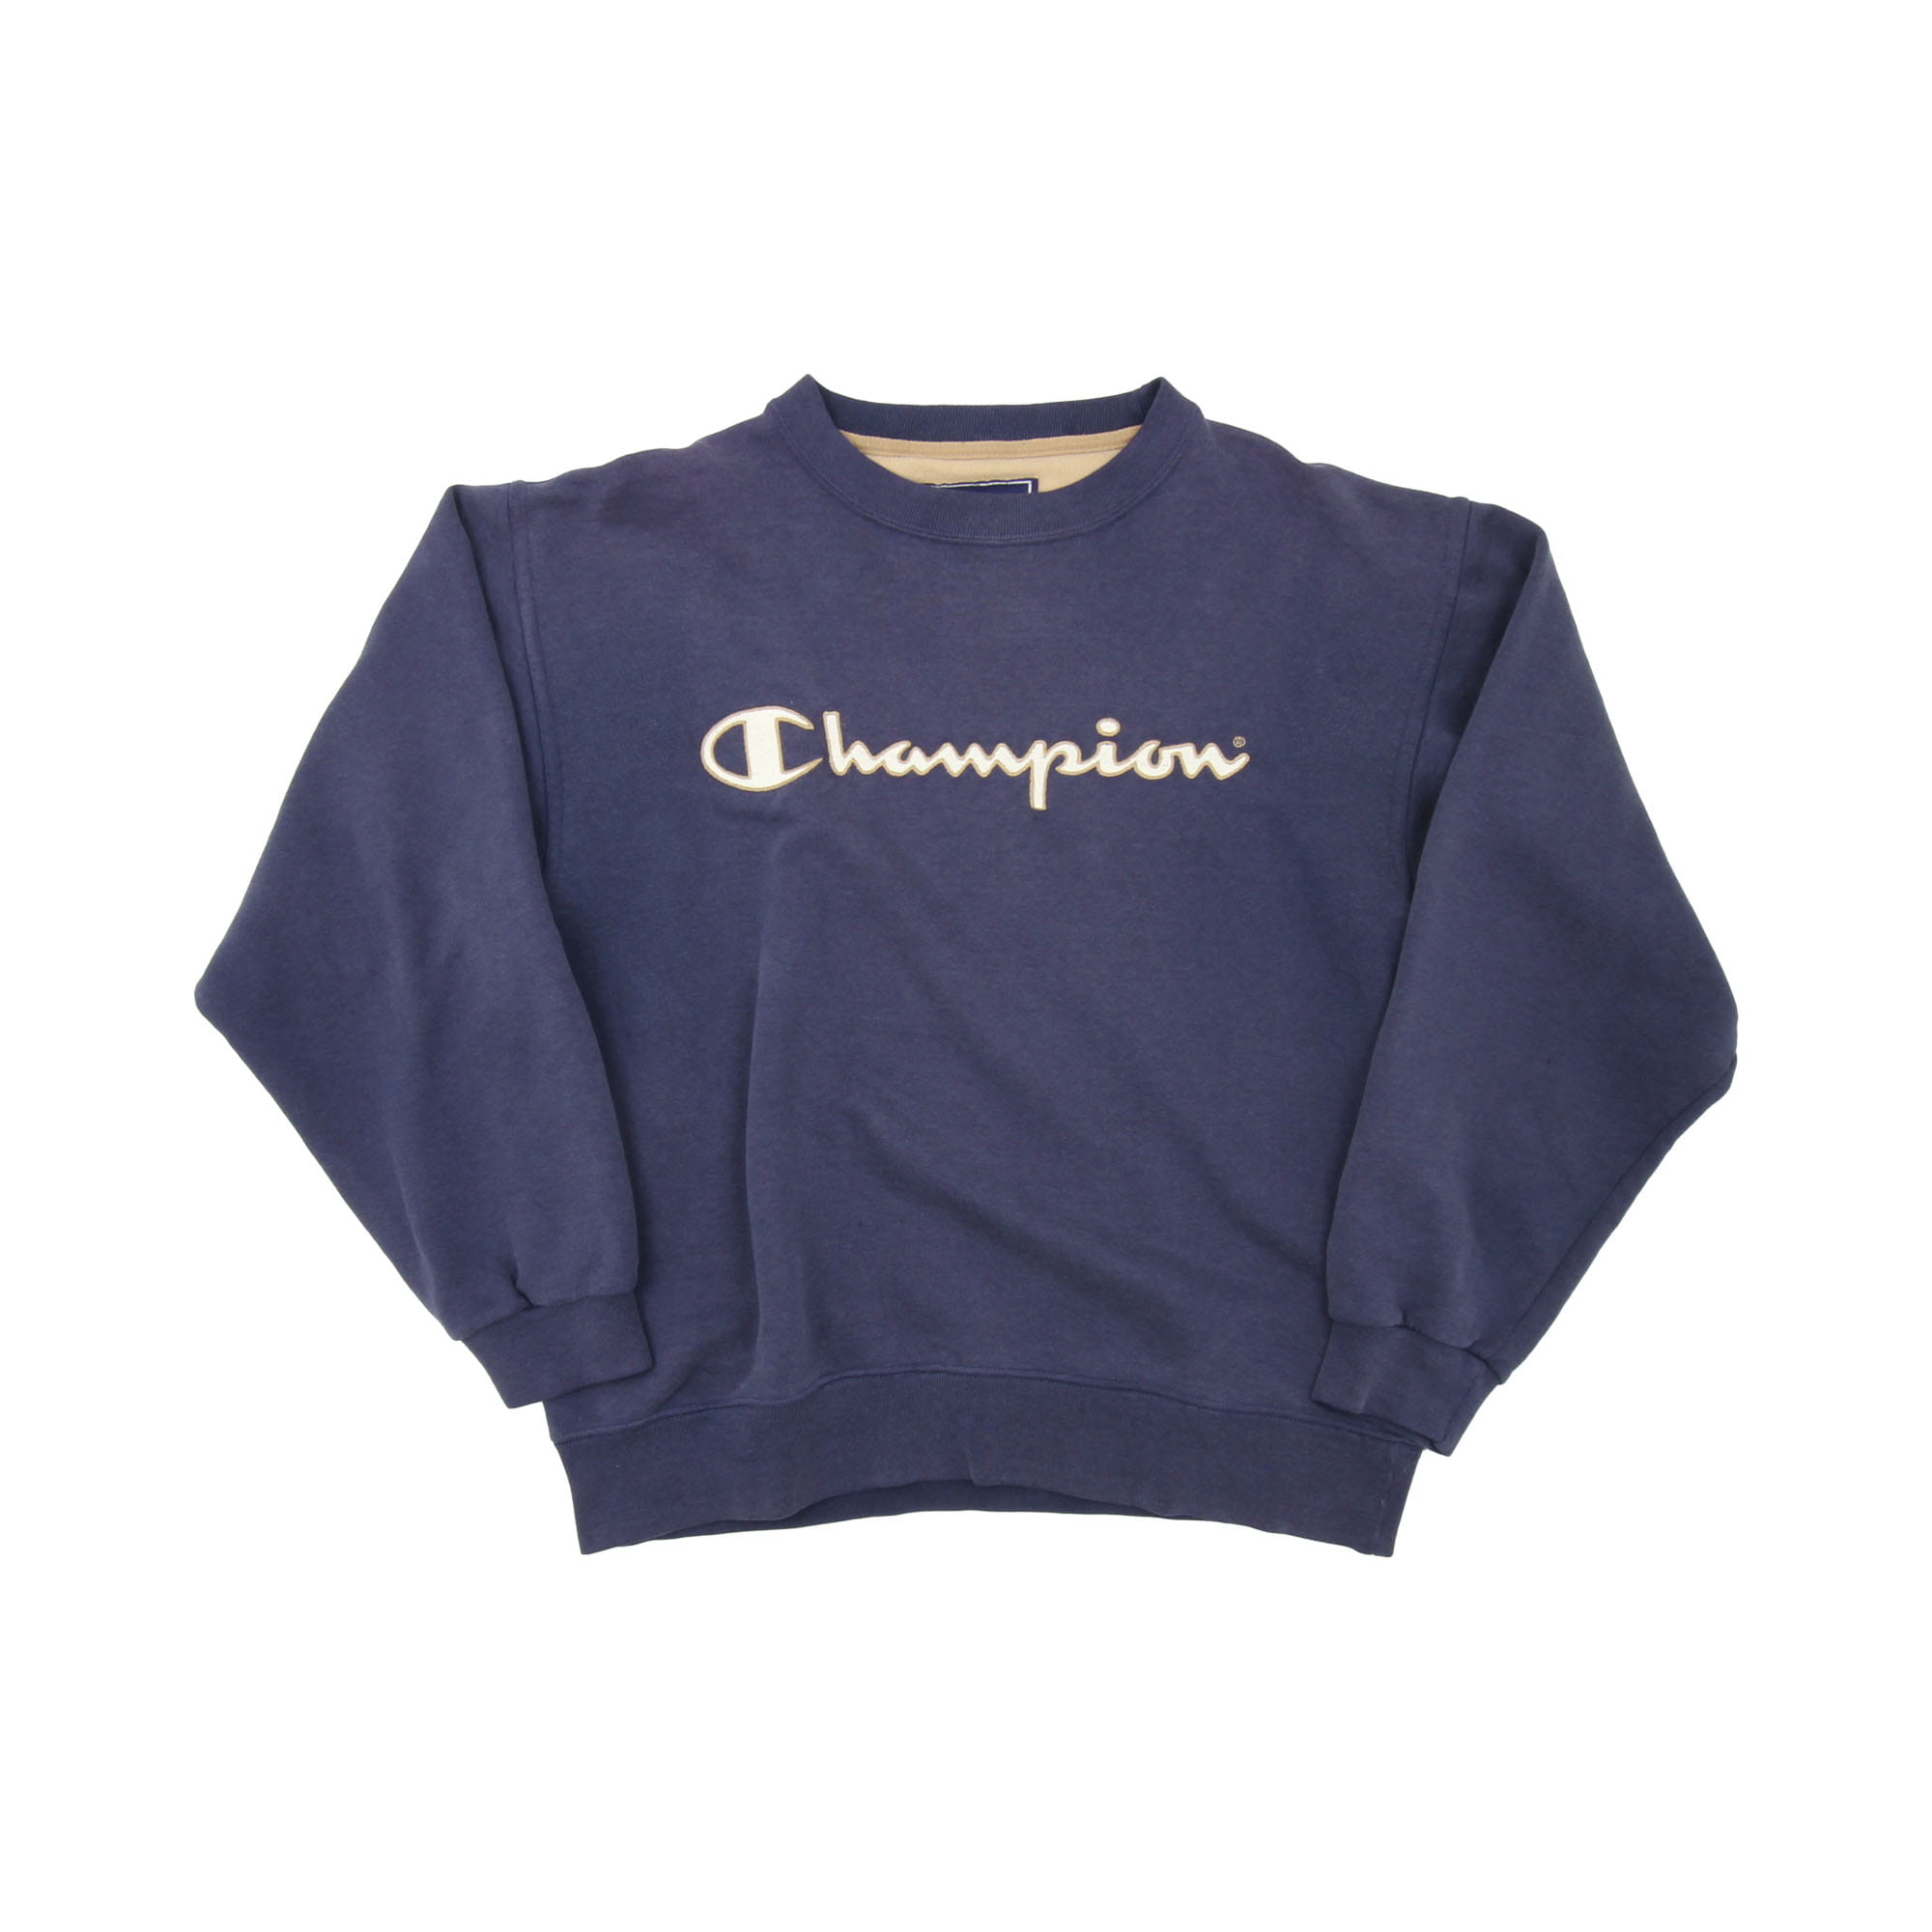 Champion Embroidered Logo Sweatshirt -  S